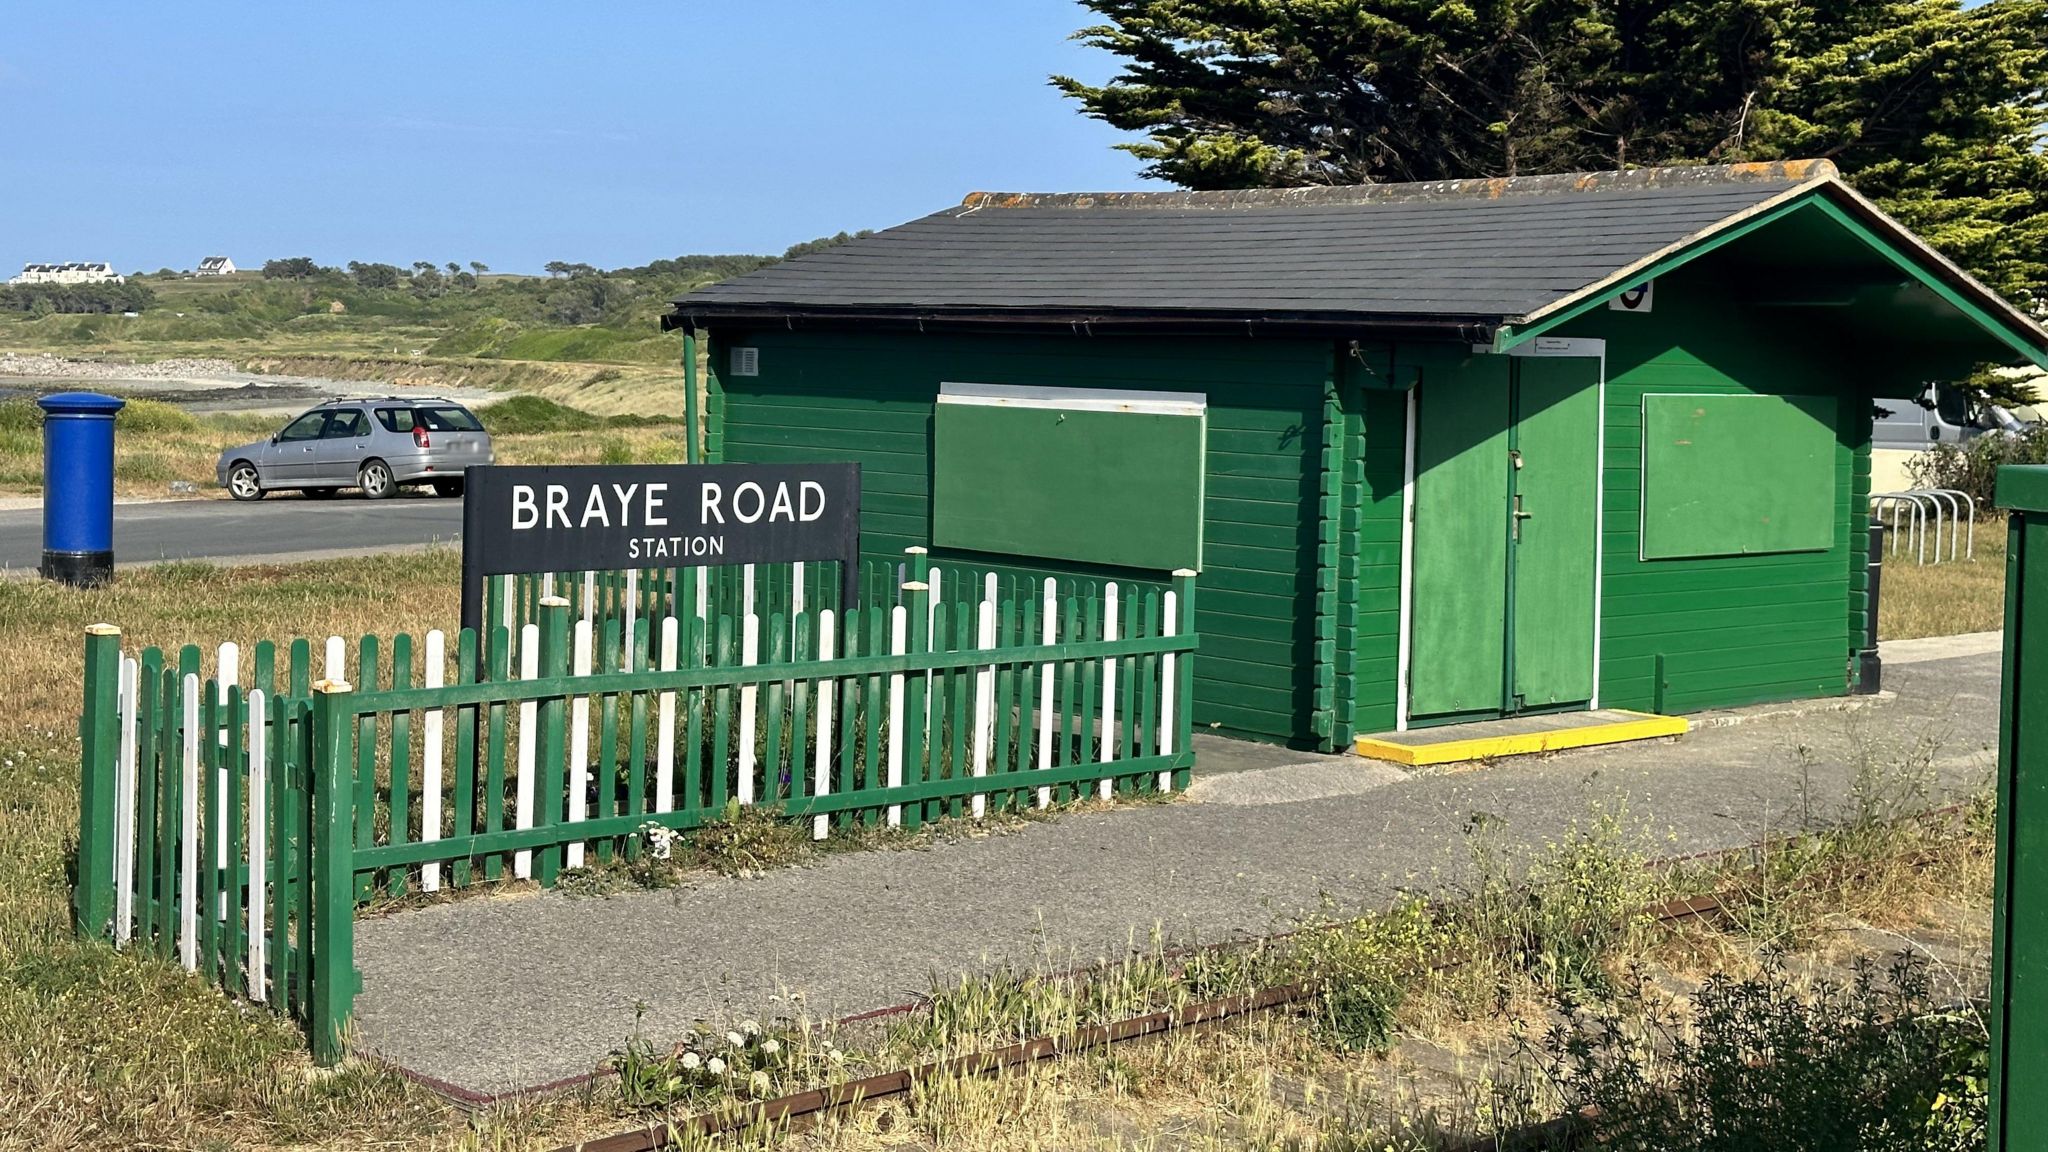 Braye Road Station, Alderney